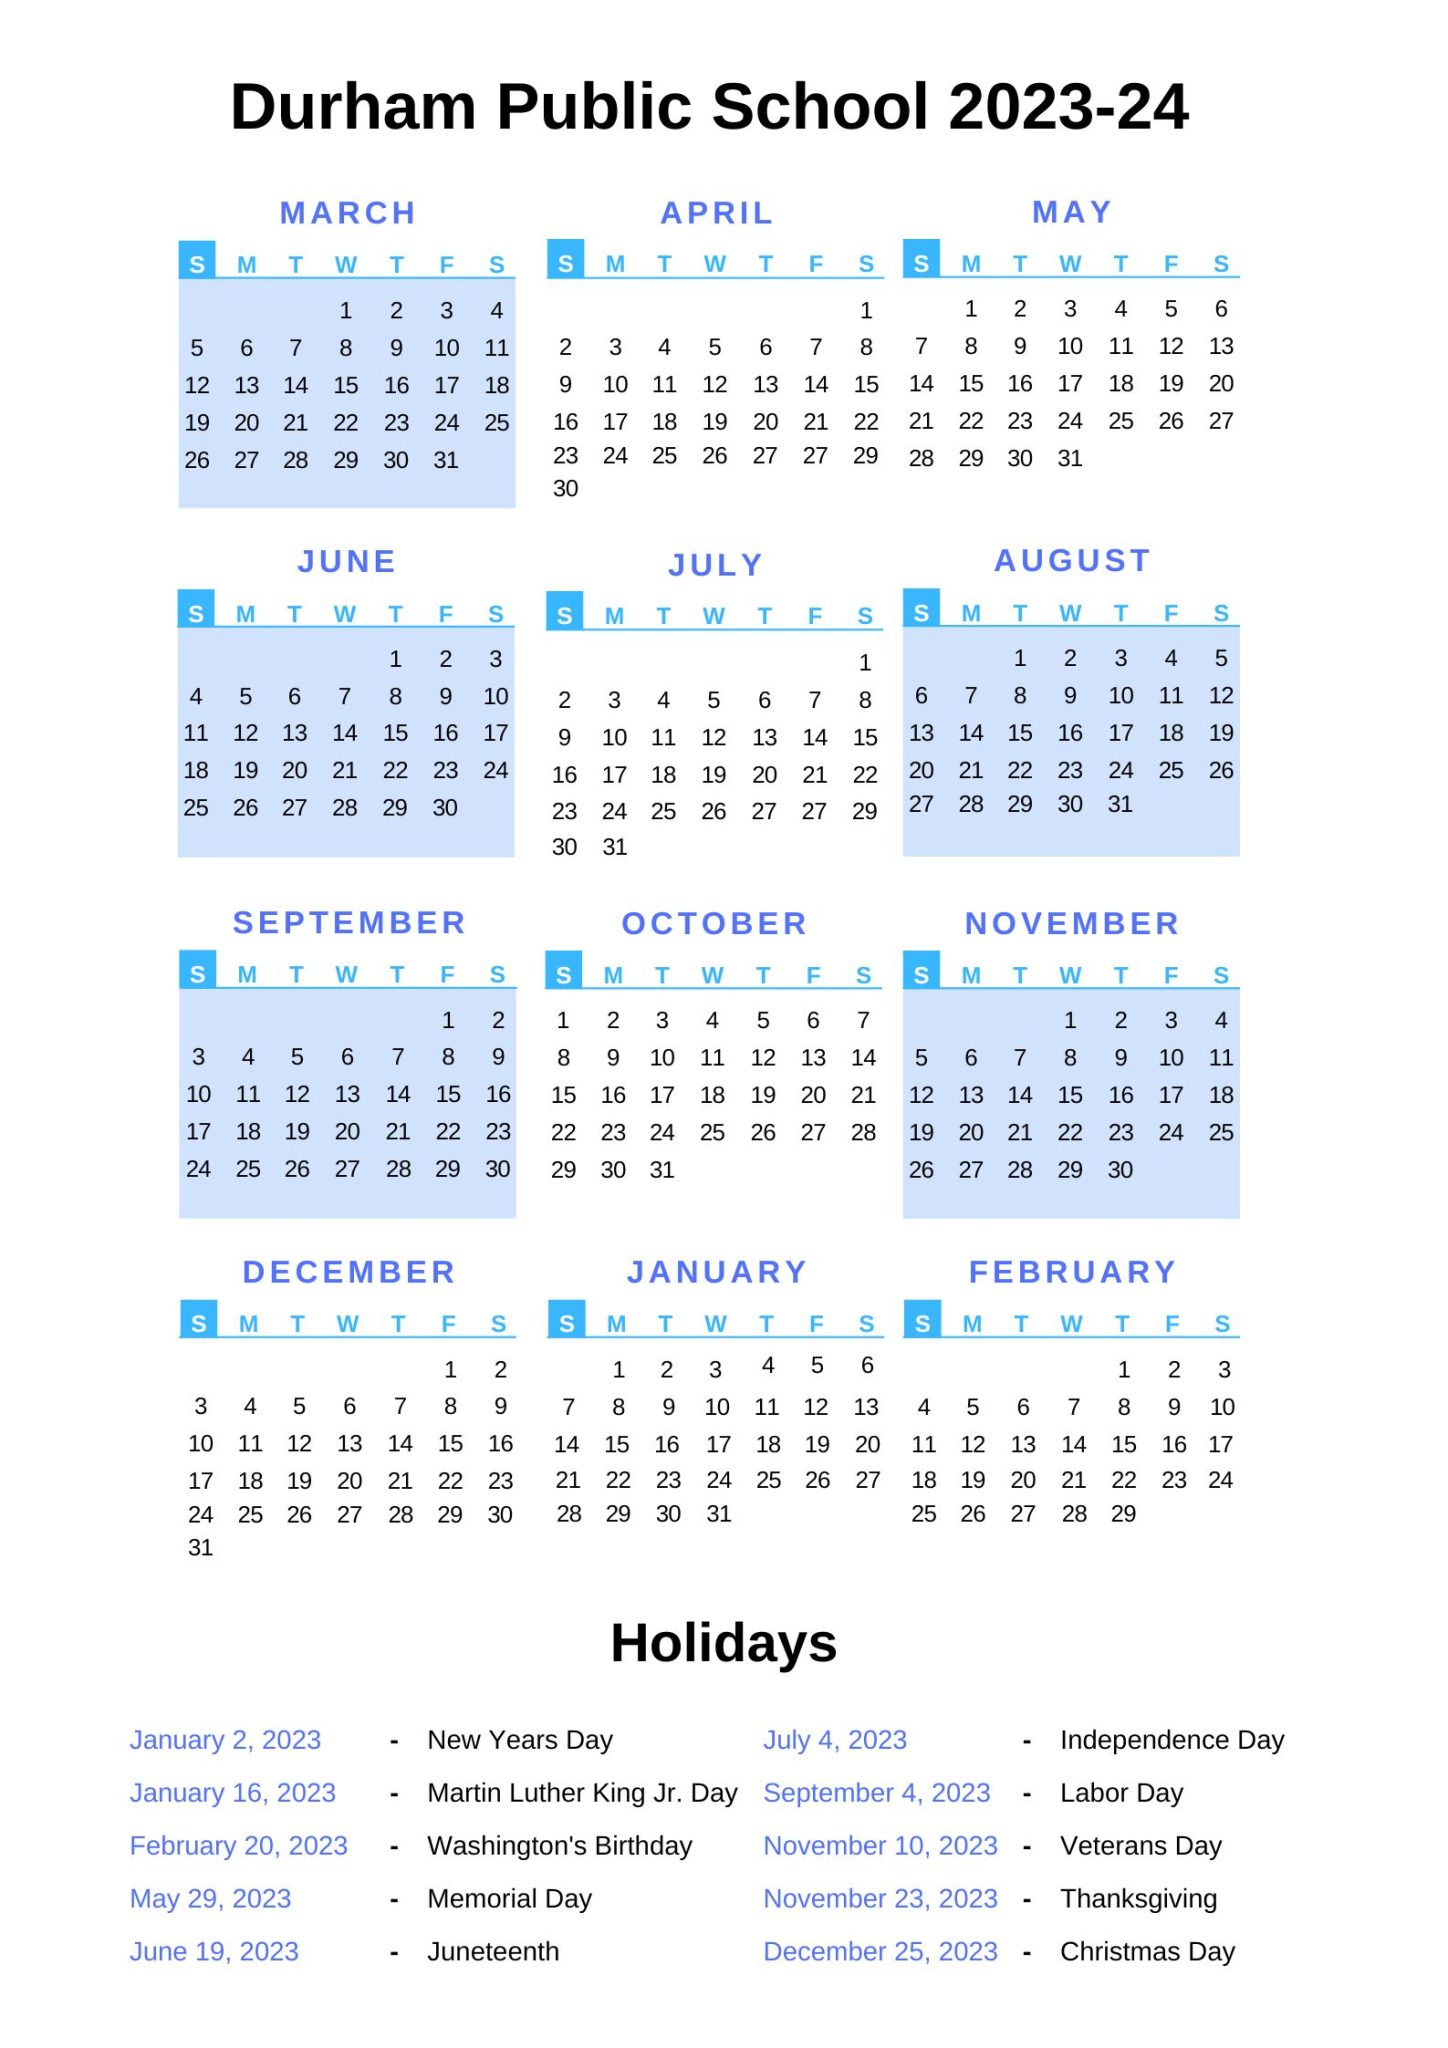 Durham Public Schools Year Round Calendar Archives - County School